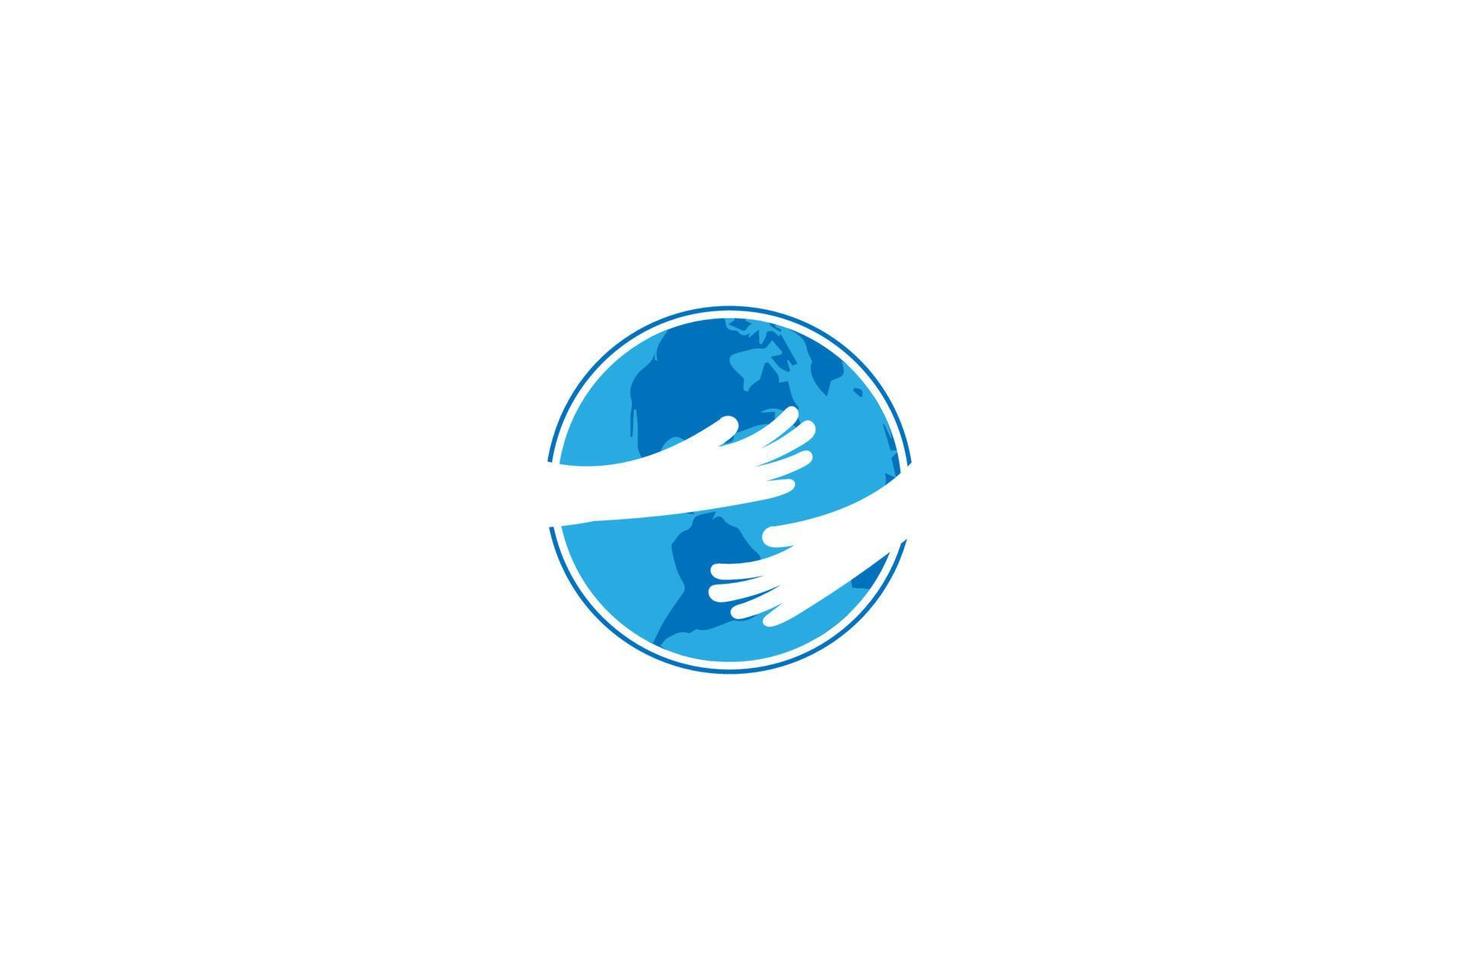 moderno abbraccio a mano globo terra mondo salva cura per l'ambiente logo design vector